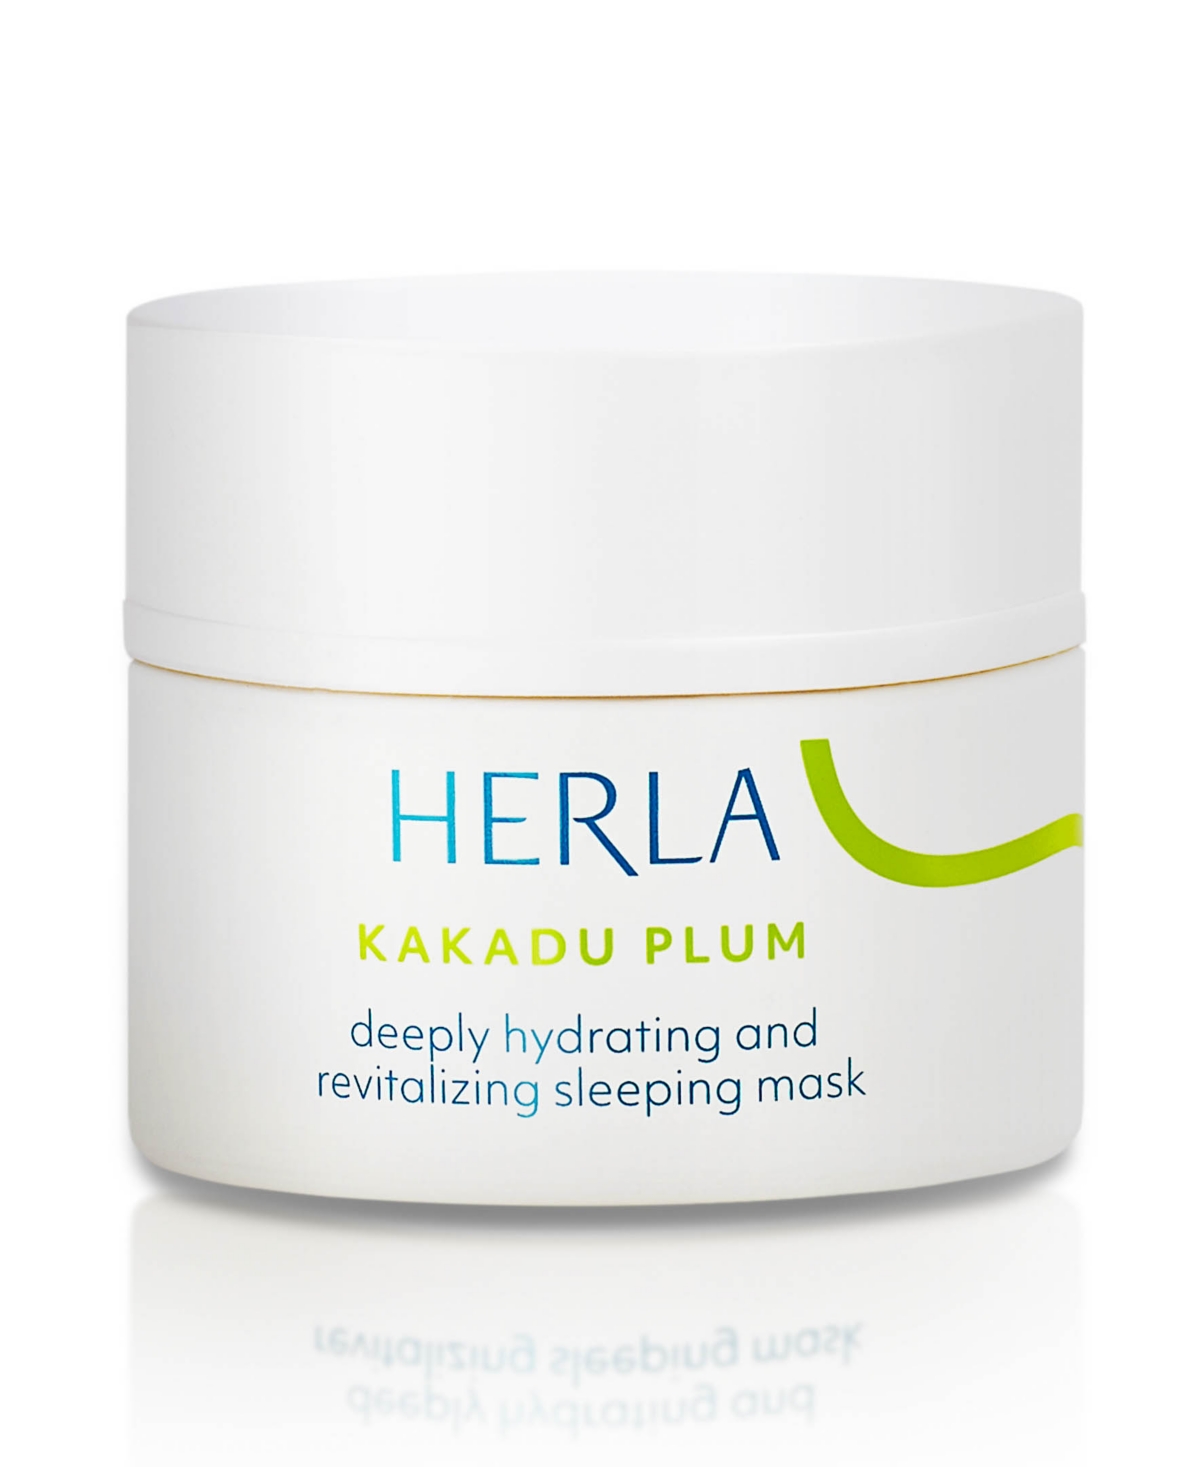 Herla Kakadu Plum Deeply Hydrating and Revitalizing Sleeping Mask